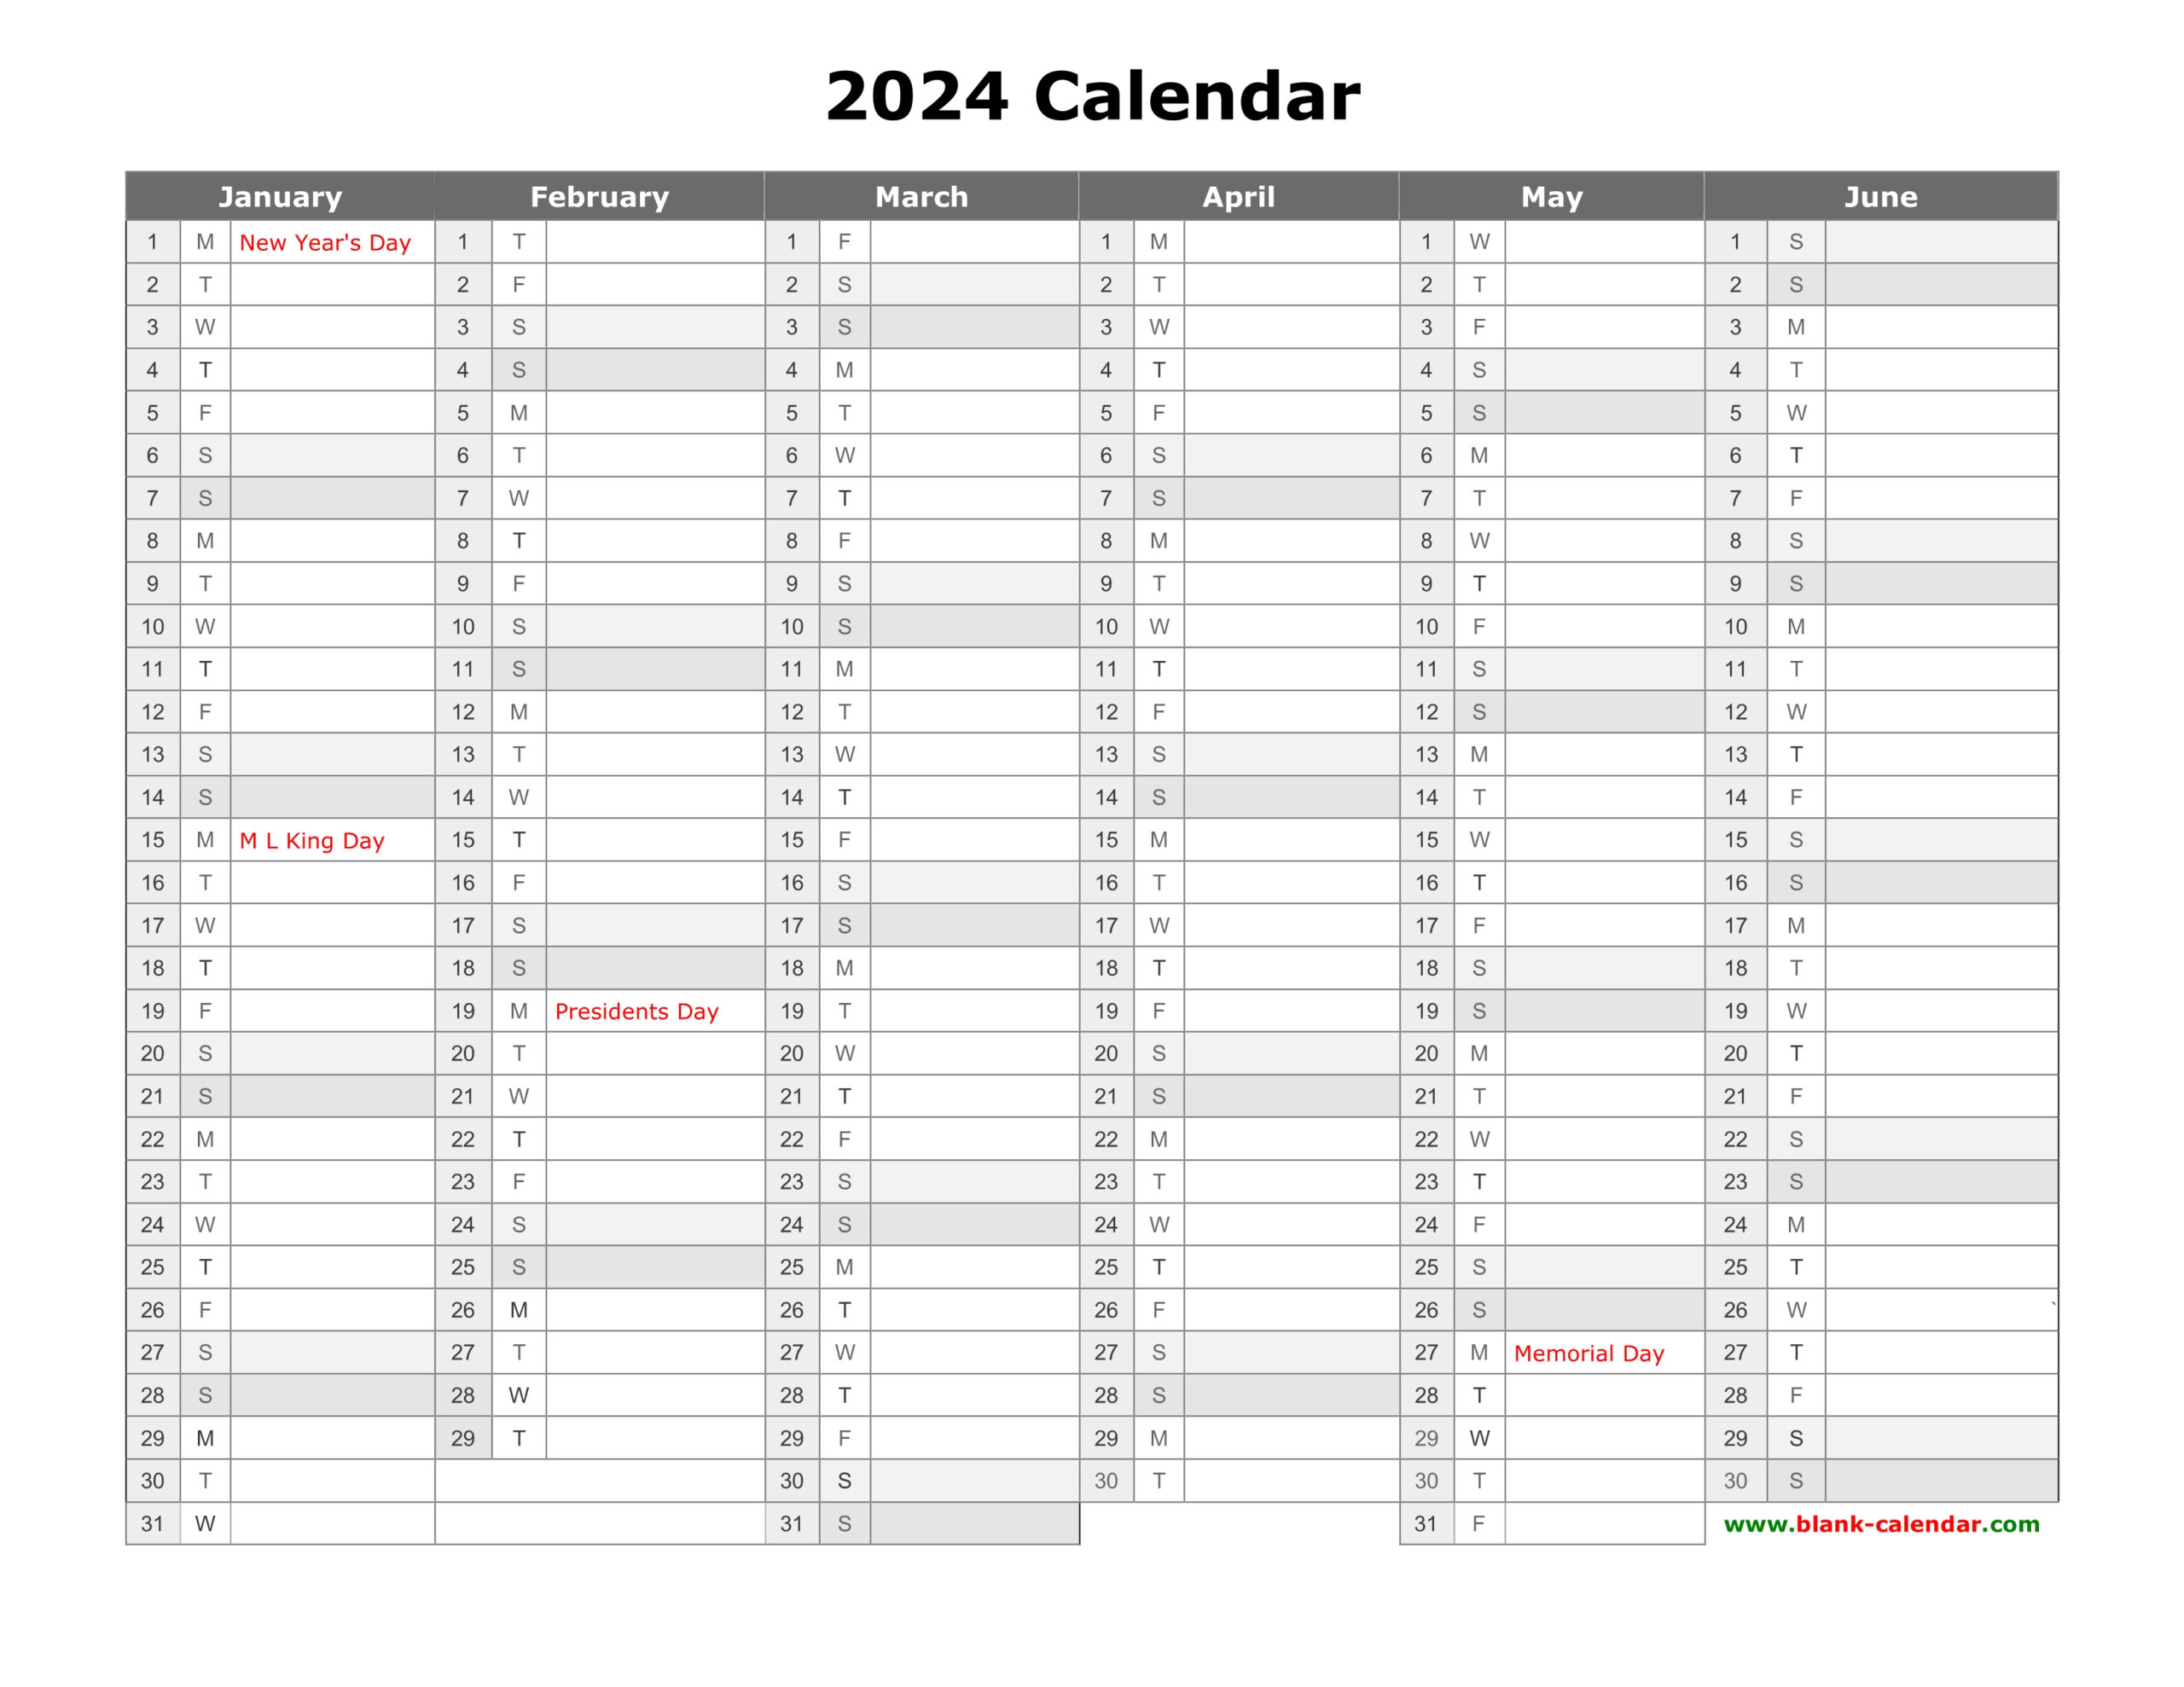 2024-calendar-one-page-with-notes-a-printable-calendar